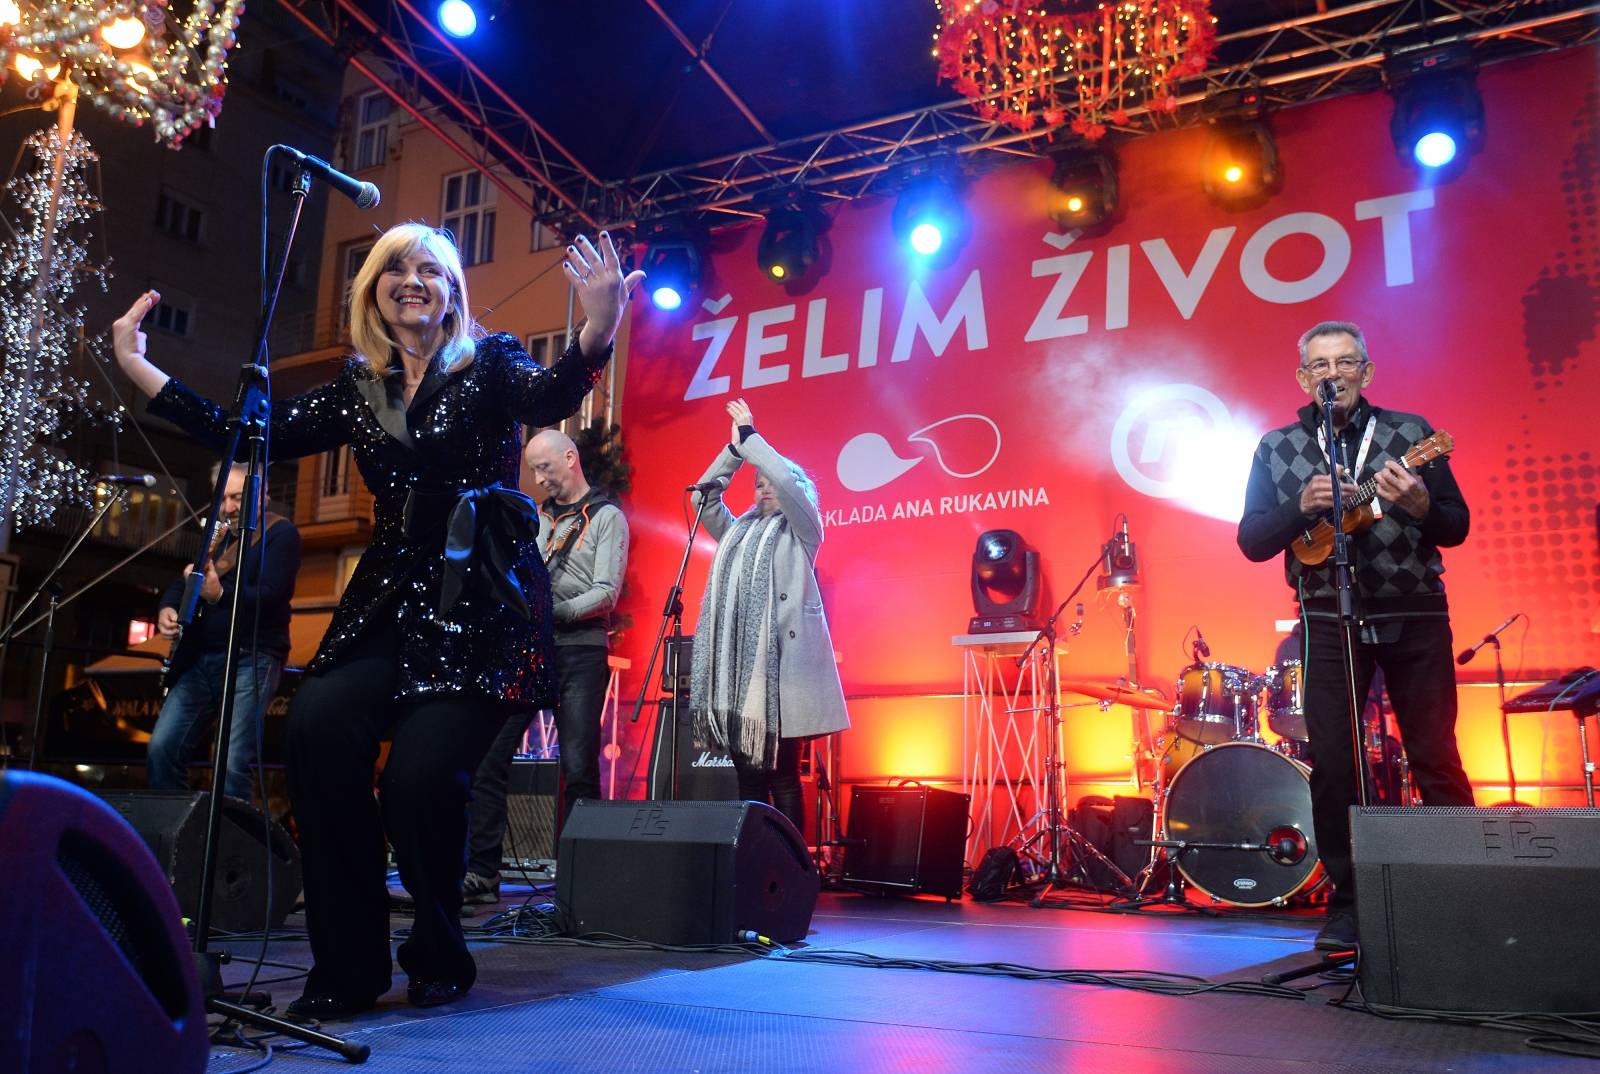 Zagreb: 14. humanitarni koncert "Želim život" Zaklade Ana Rukavina